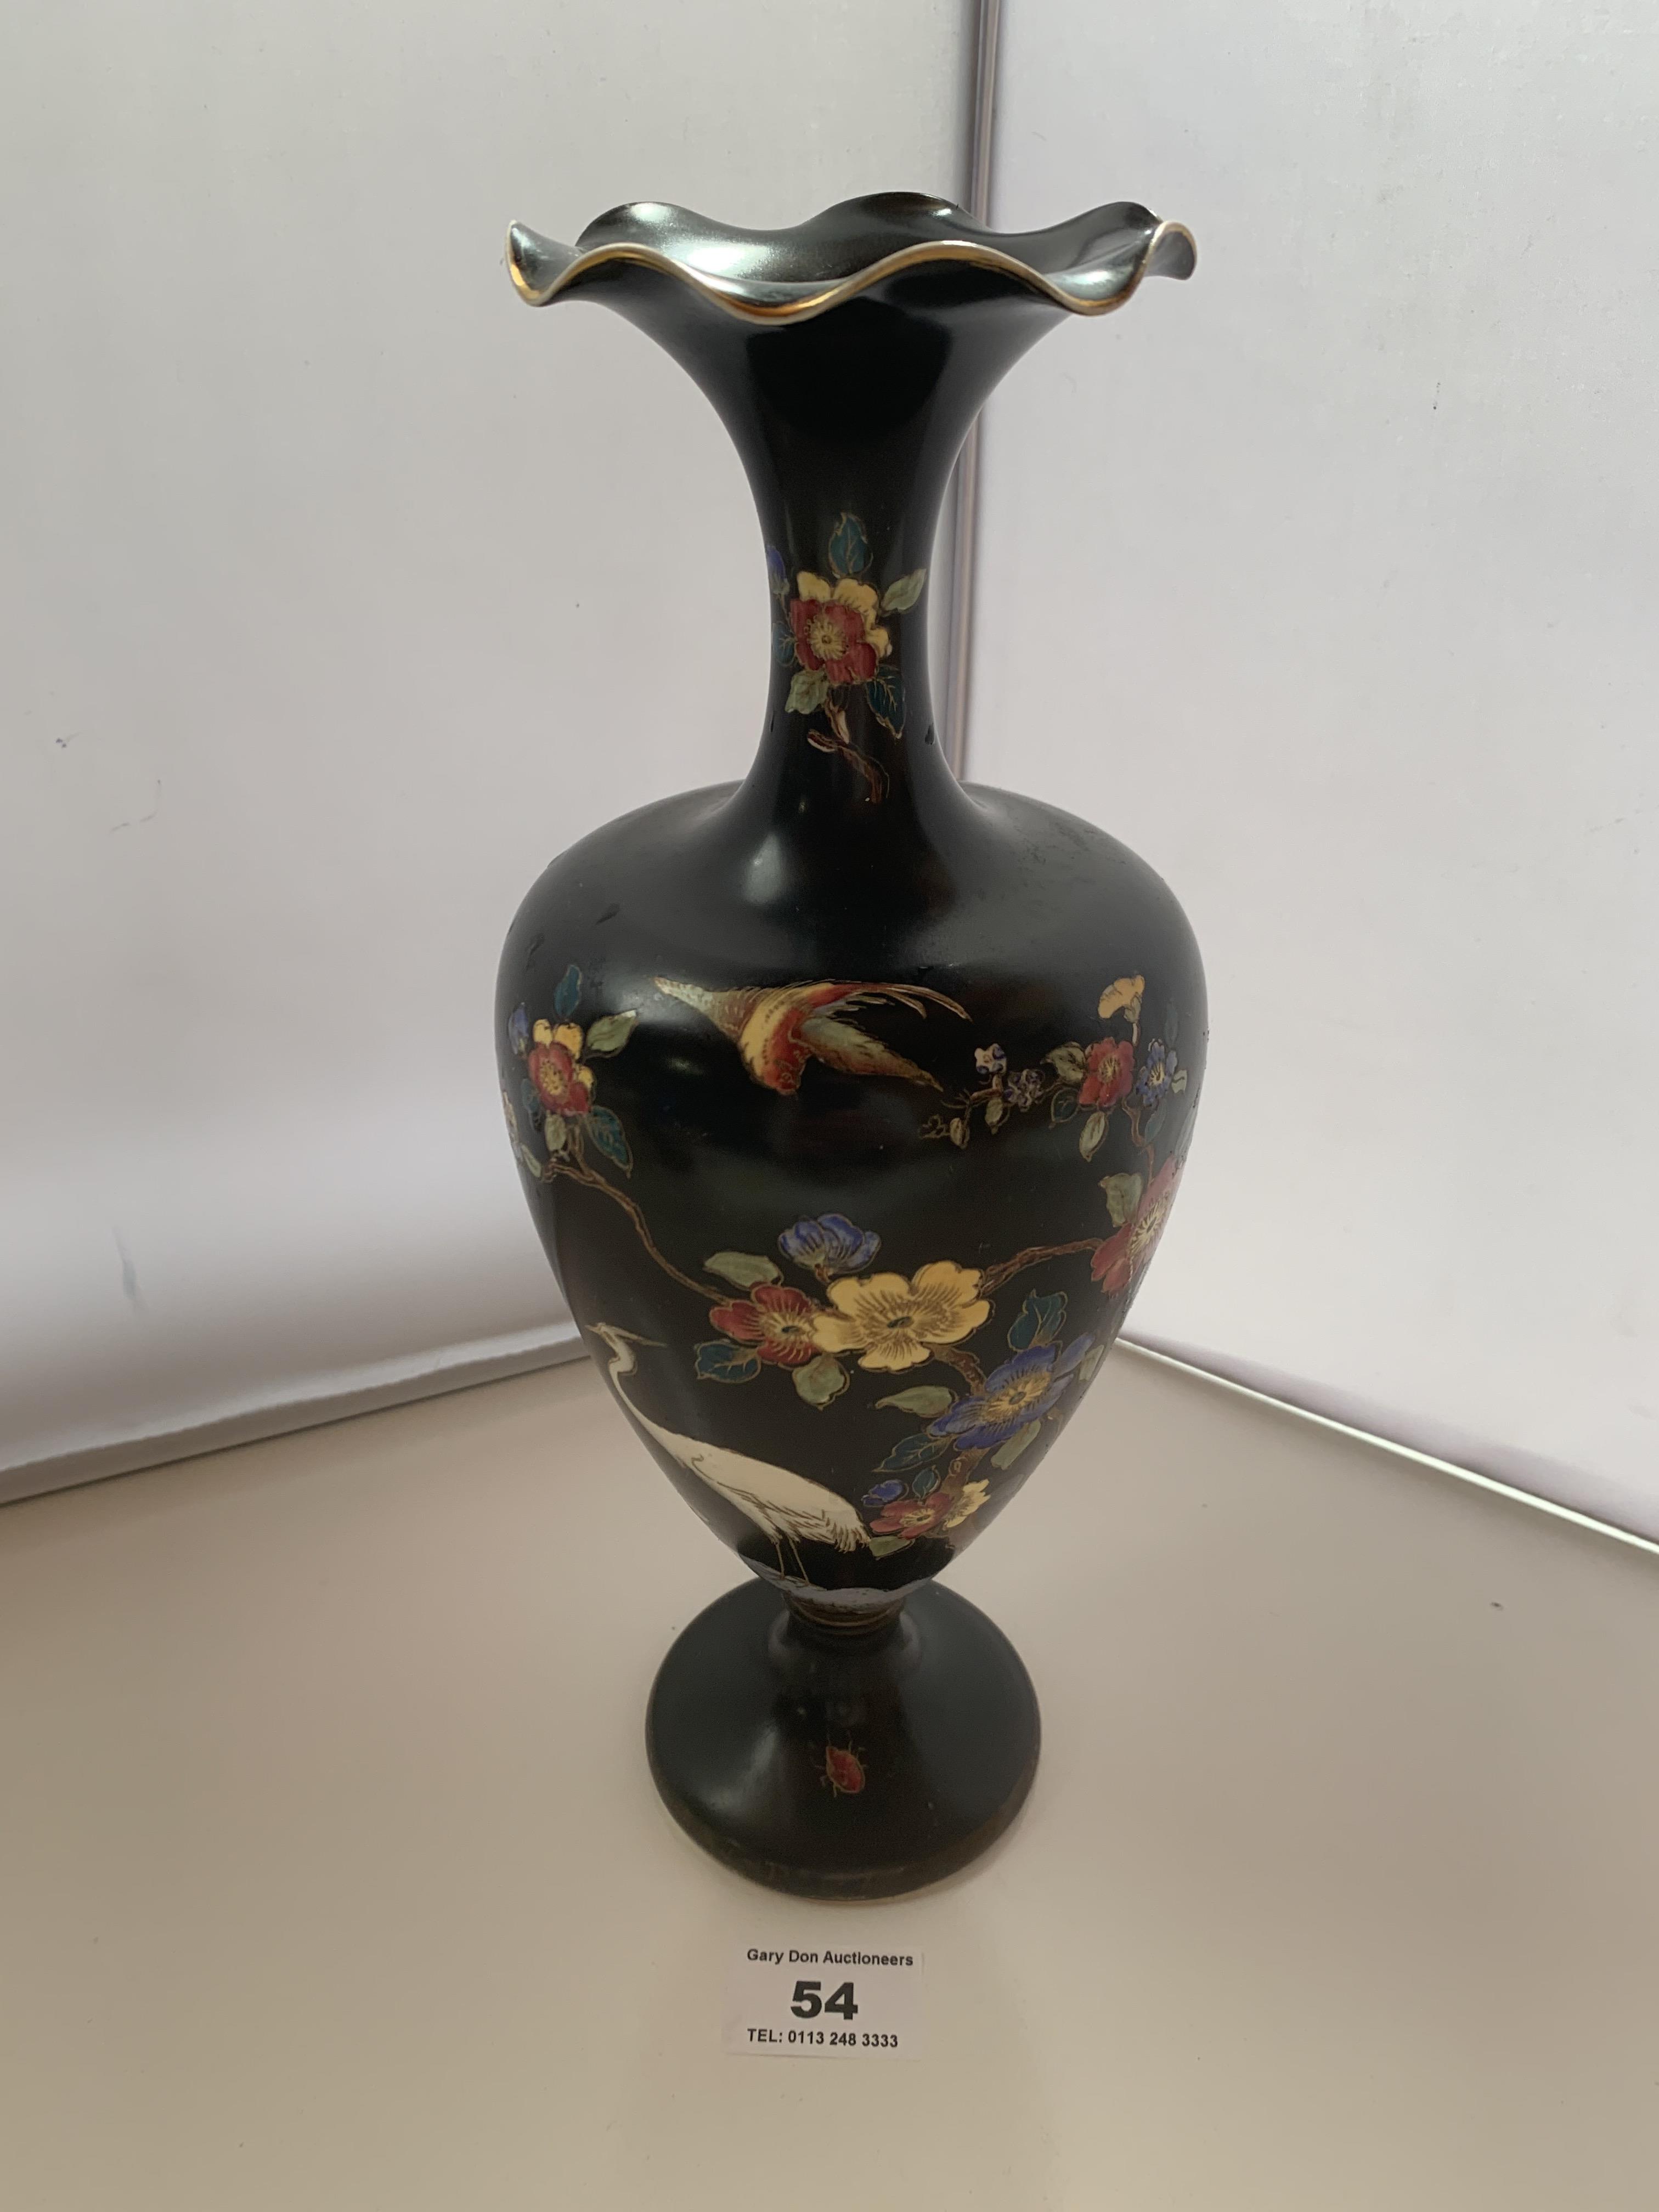 Carlton Cloisonne Ware vase, 11” (28cm) high. Few light scratches but no damage or missing pieces